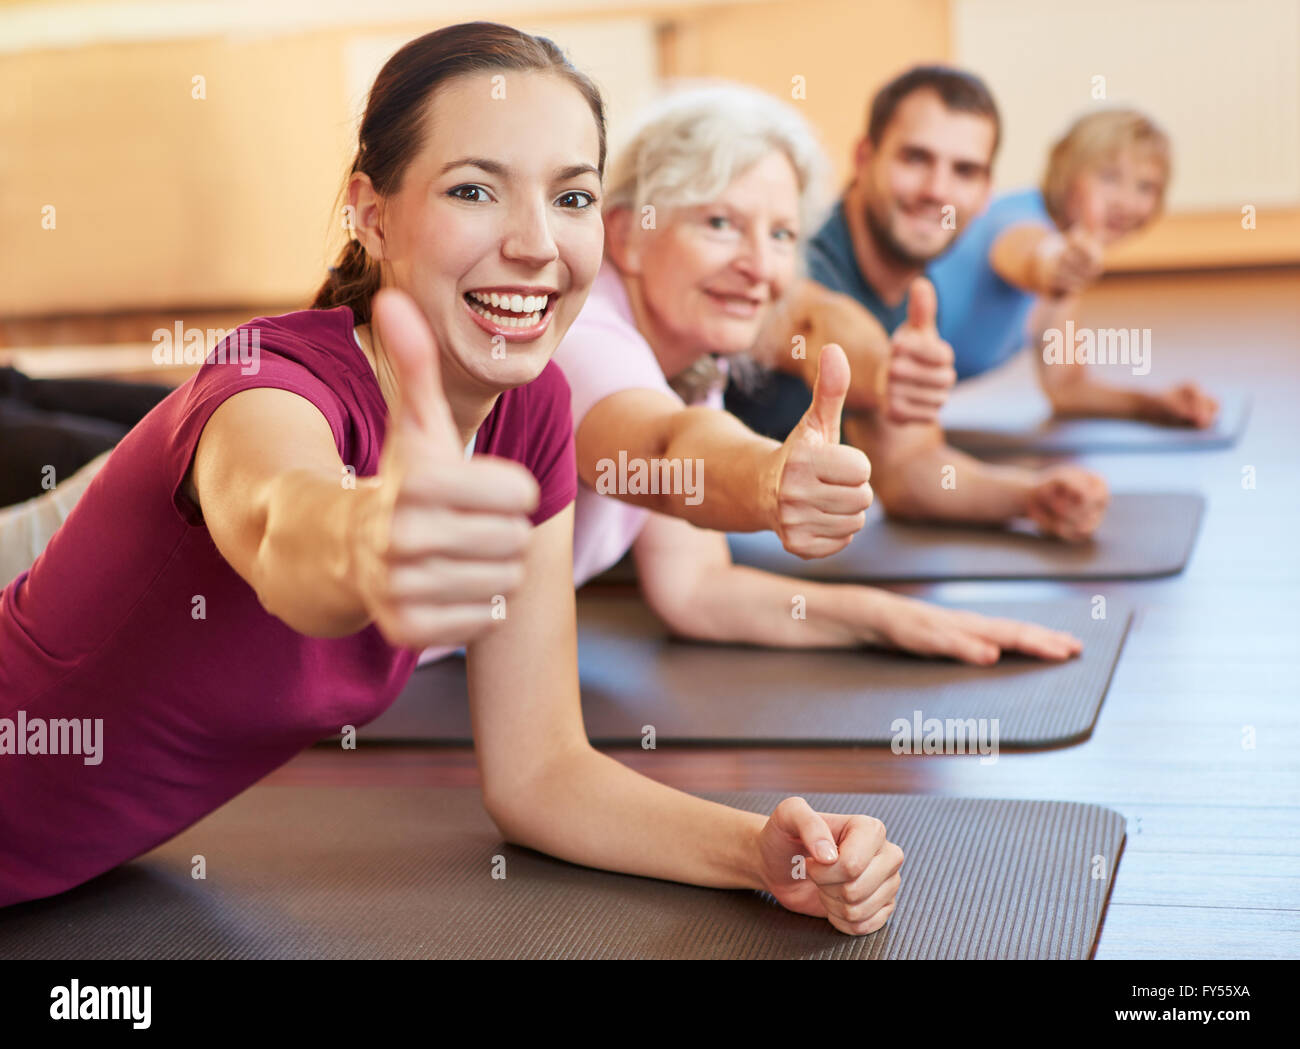 Felice group holding i pollici in su in un centro fitness Foto Stock